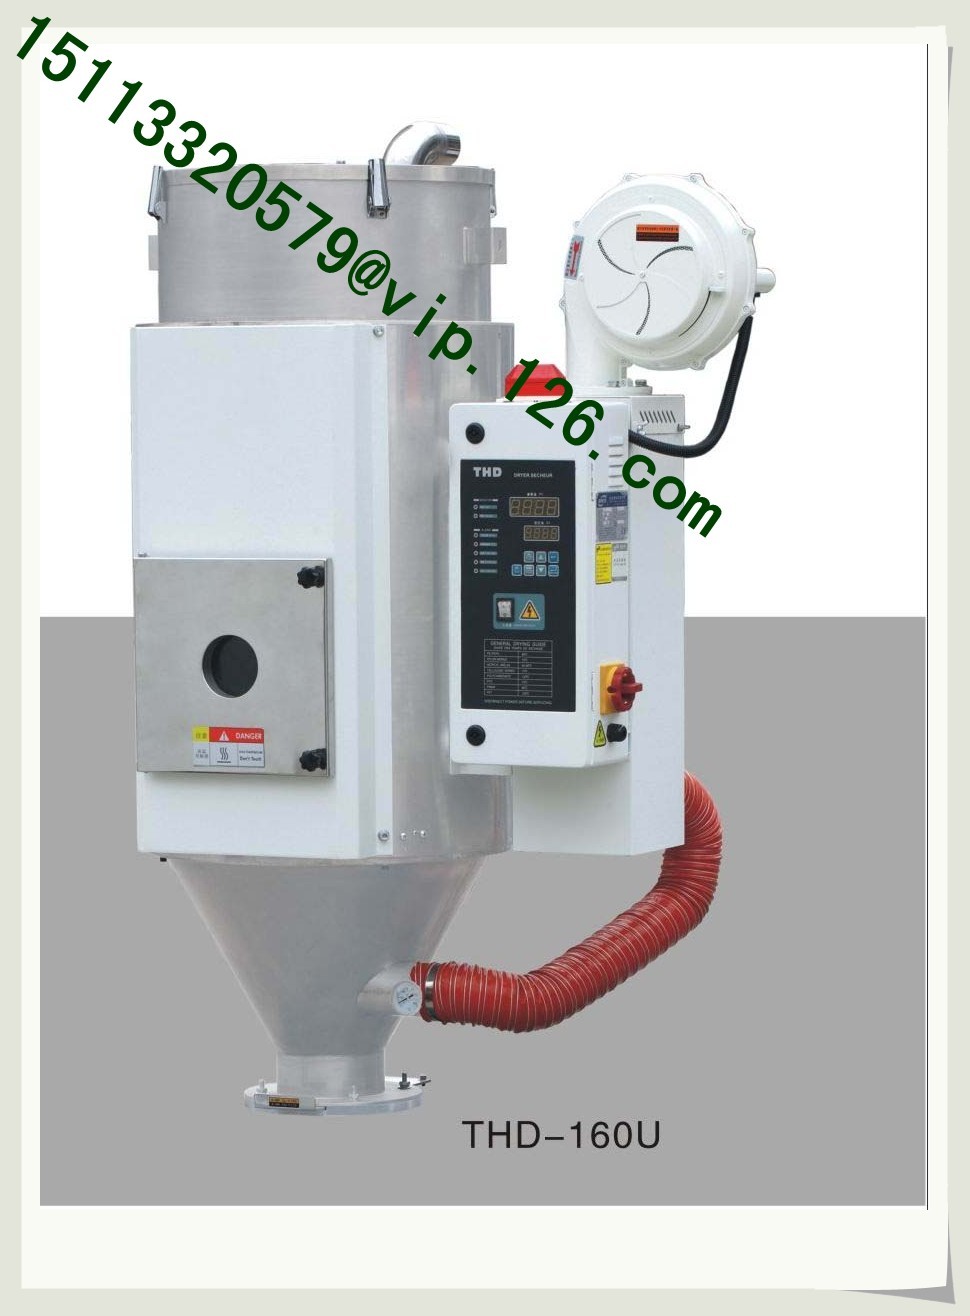 Euro-Hopper Dryer/plastic pellets hot air hopper dryer with vacuum loader for injection